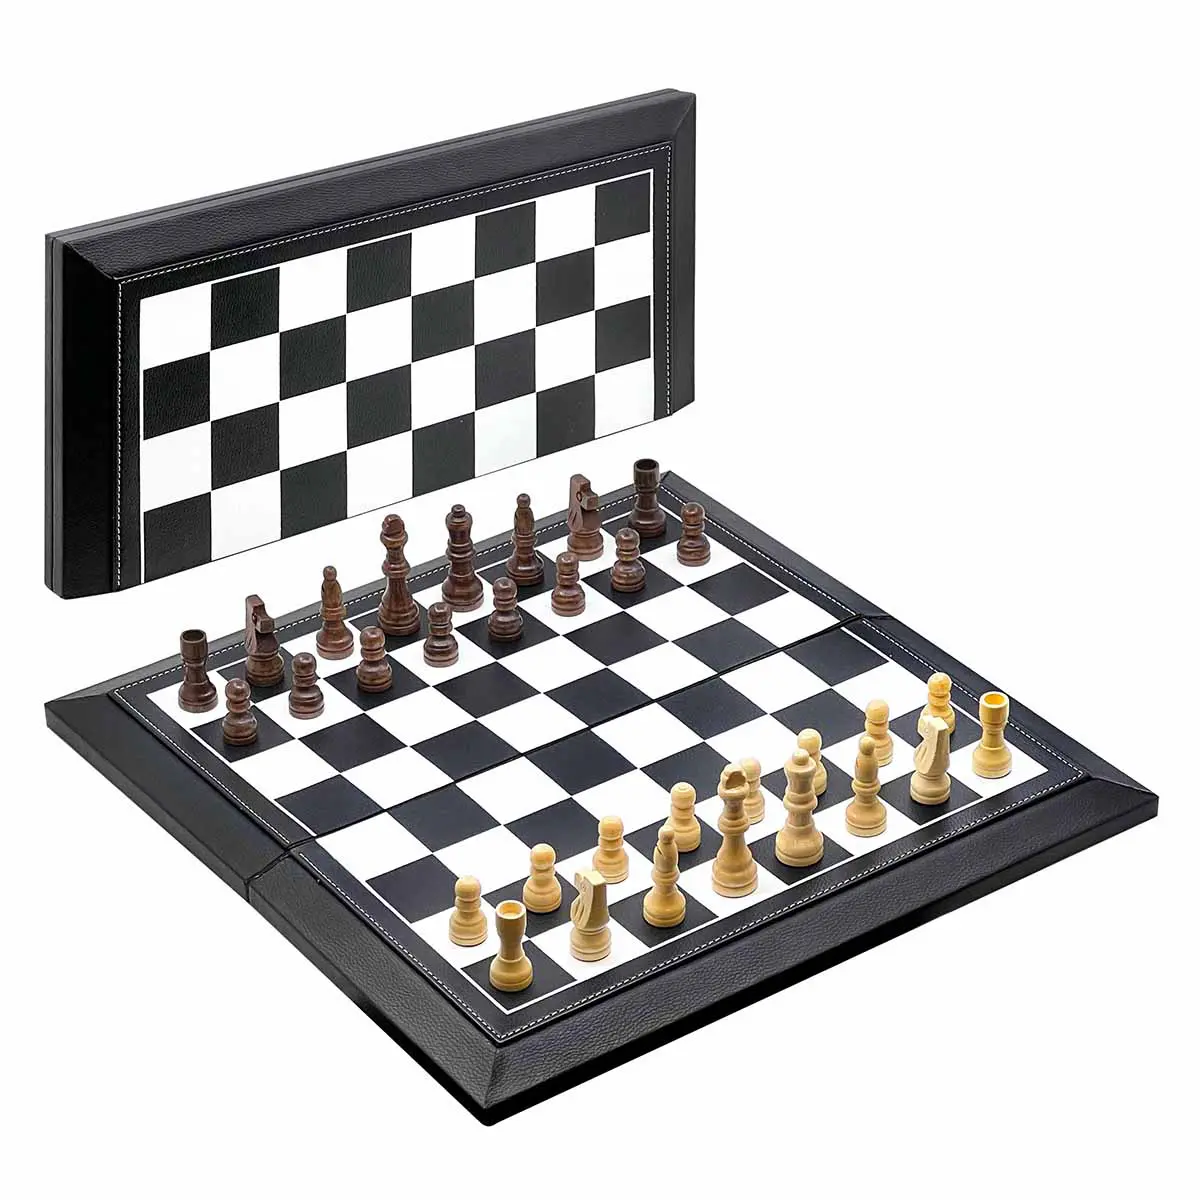 Xadrez para iniciantes - Aula 1 // História do xadrez, o tabuleiro